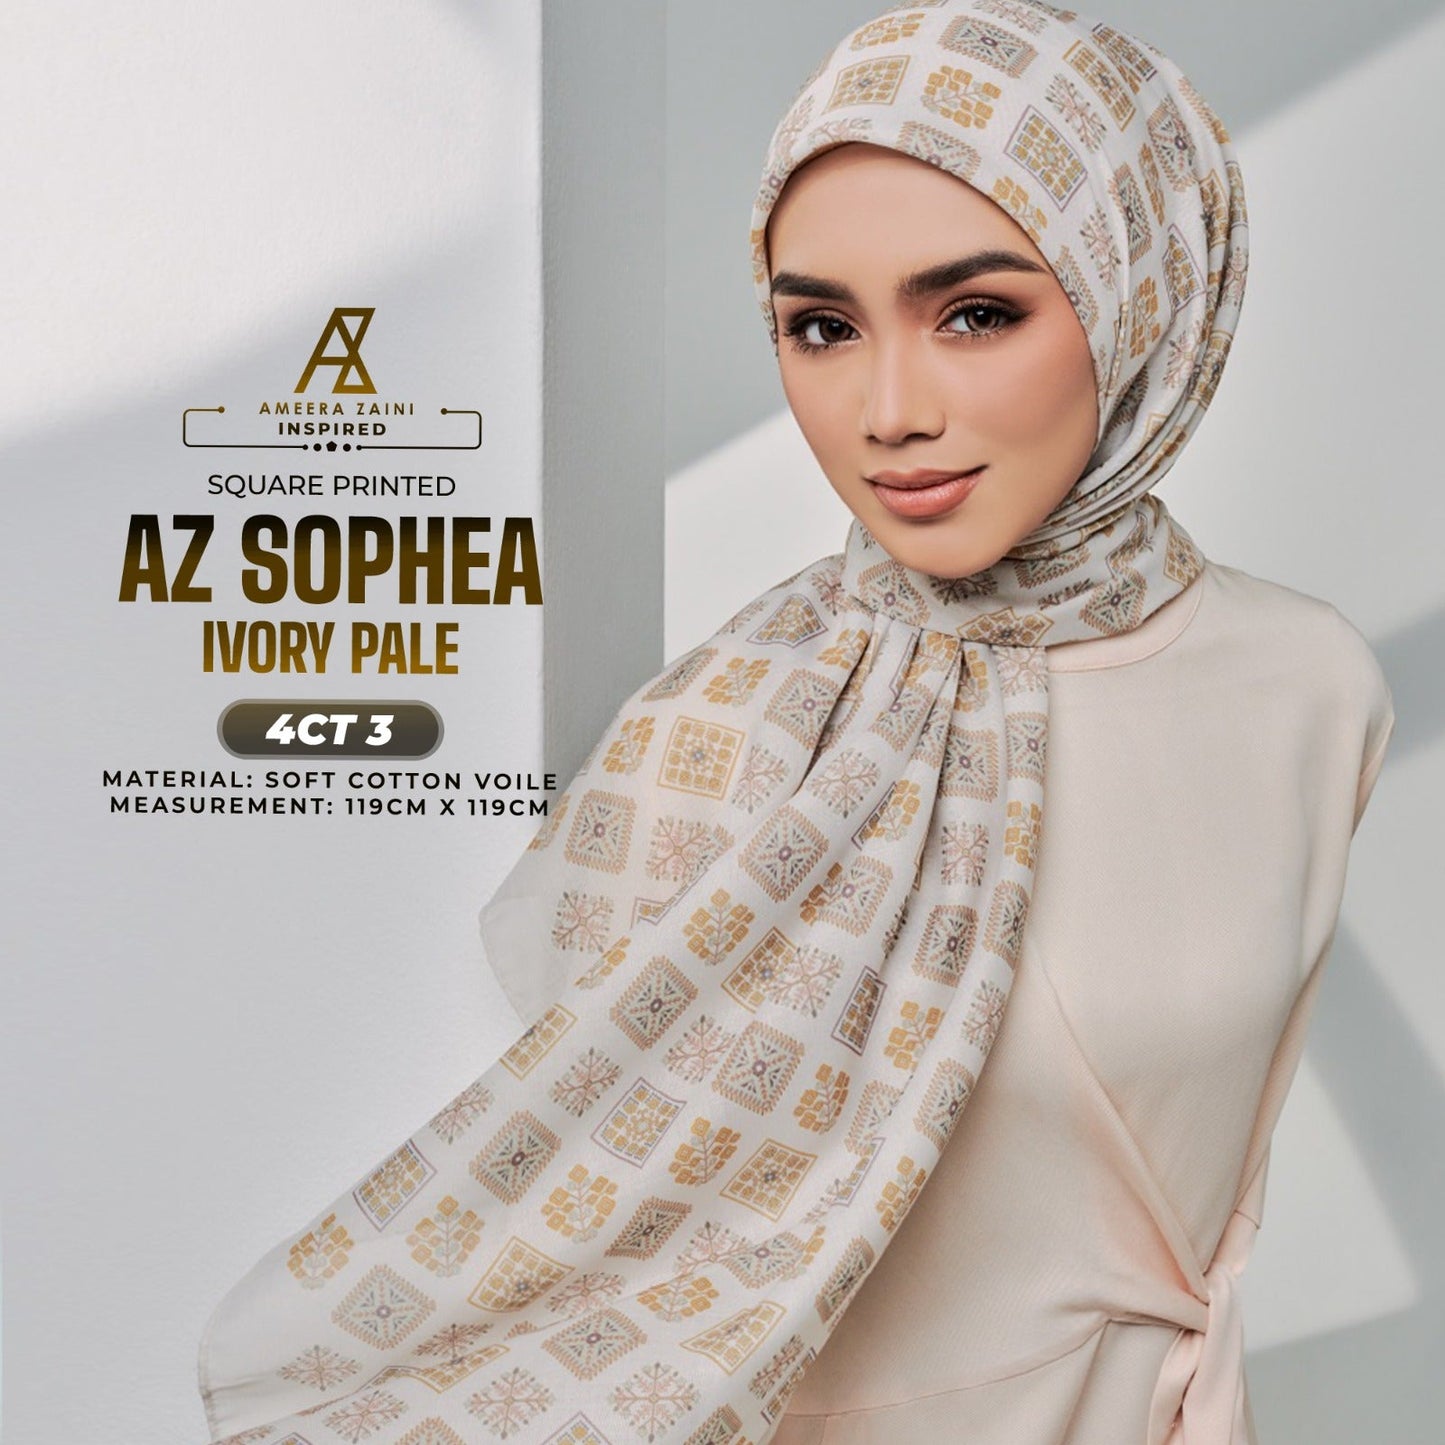 Ameera Zaini Inspired AZ SOPHEA SQ Collection (4CT)